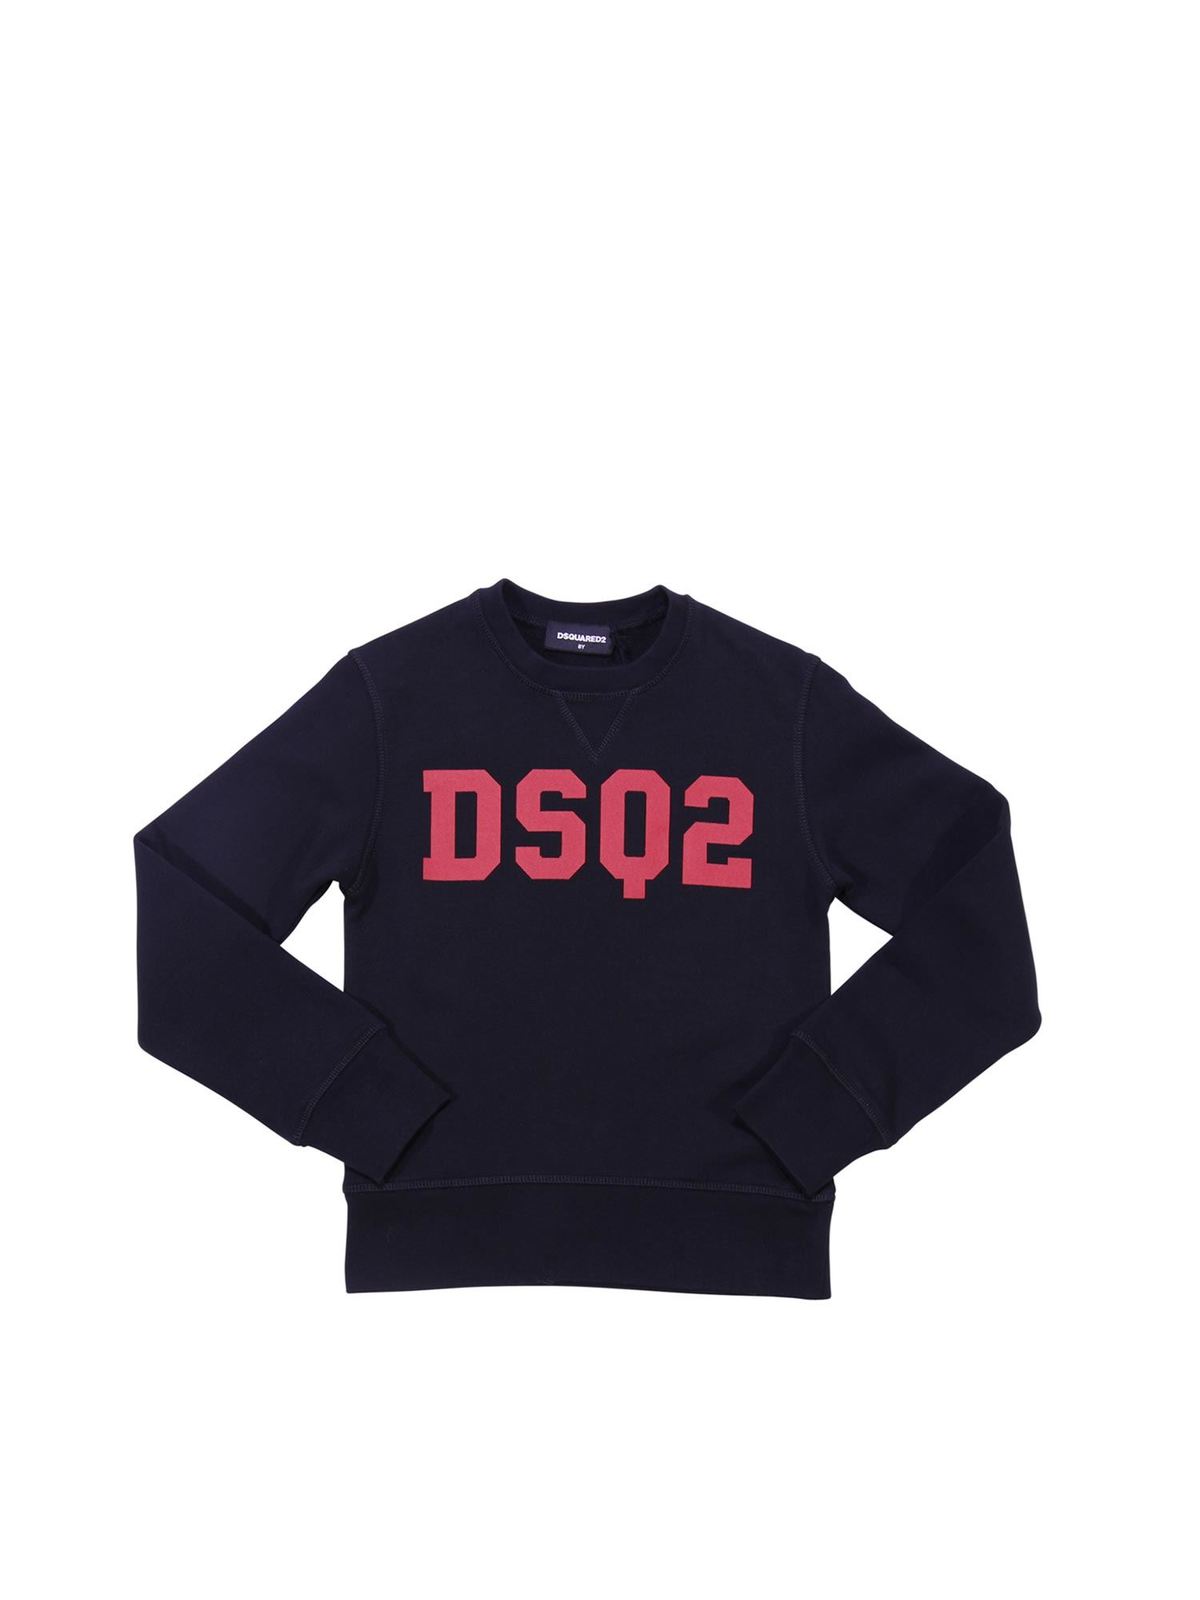 dsq2 sweater